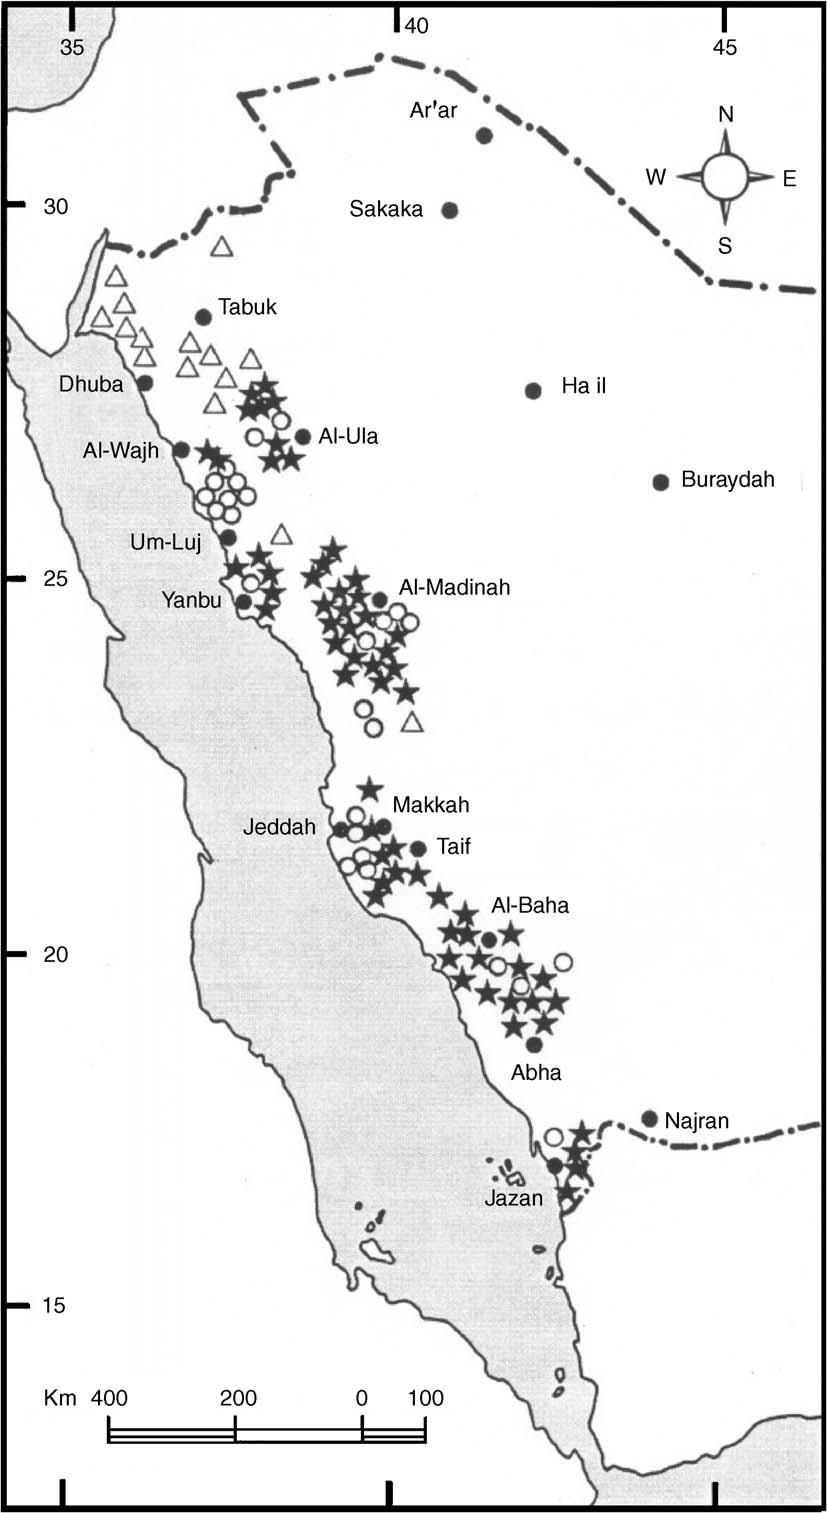 24 A.M.H. Al-Johany / Journal of Arid Environments 68 (2007) 20 30 Fig. 2. Present distribution of Panthera pardus nimr in Saudi Arabia.